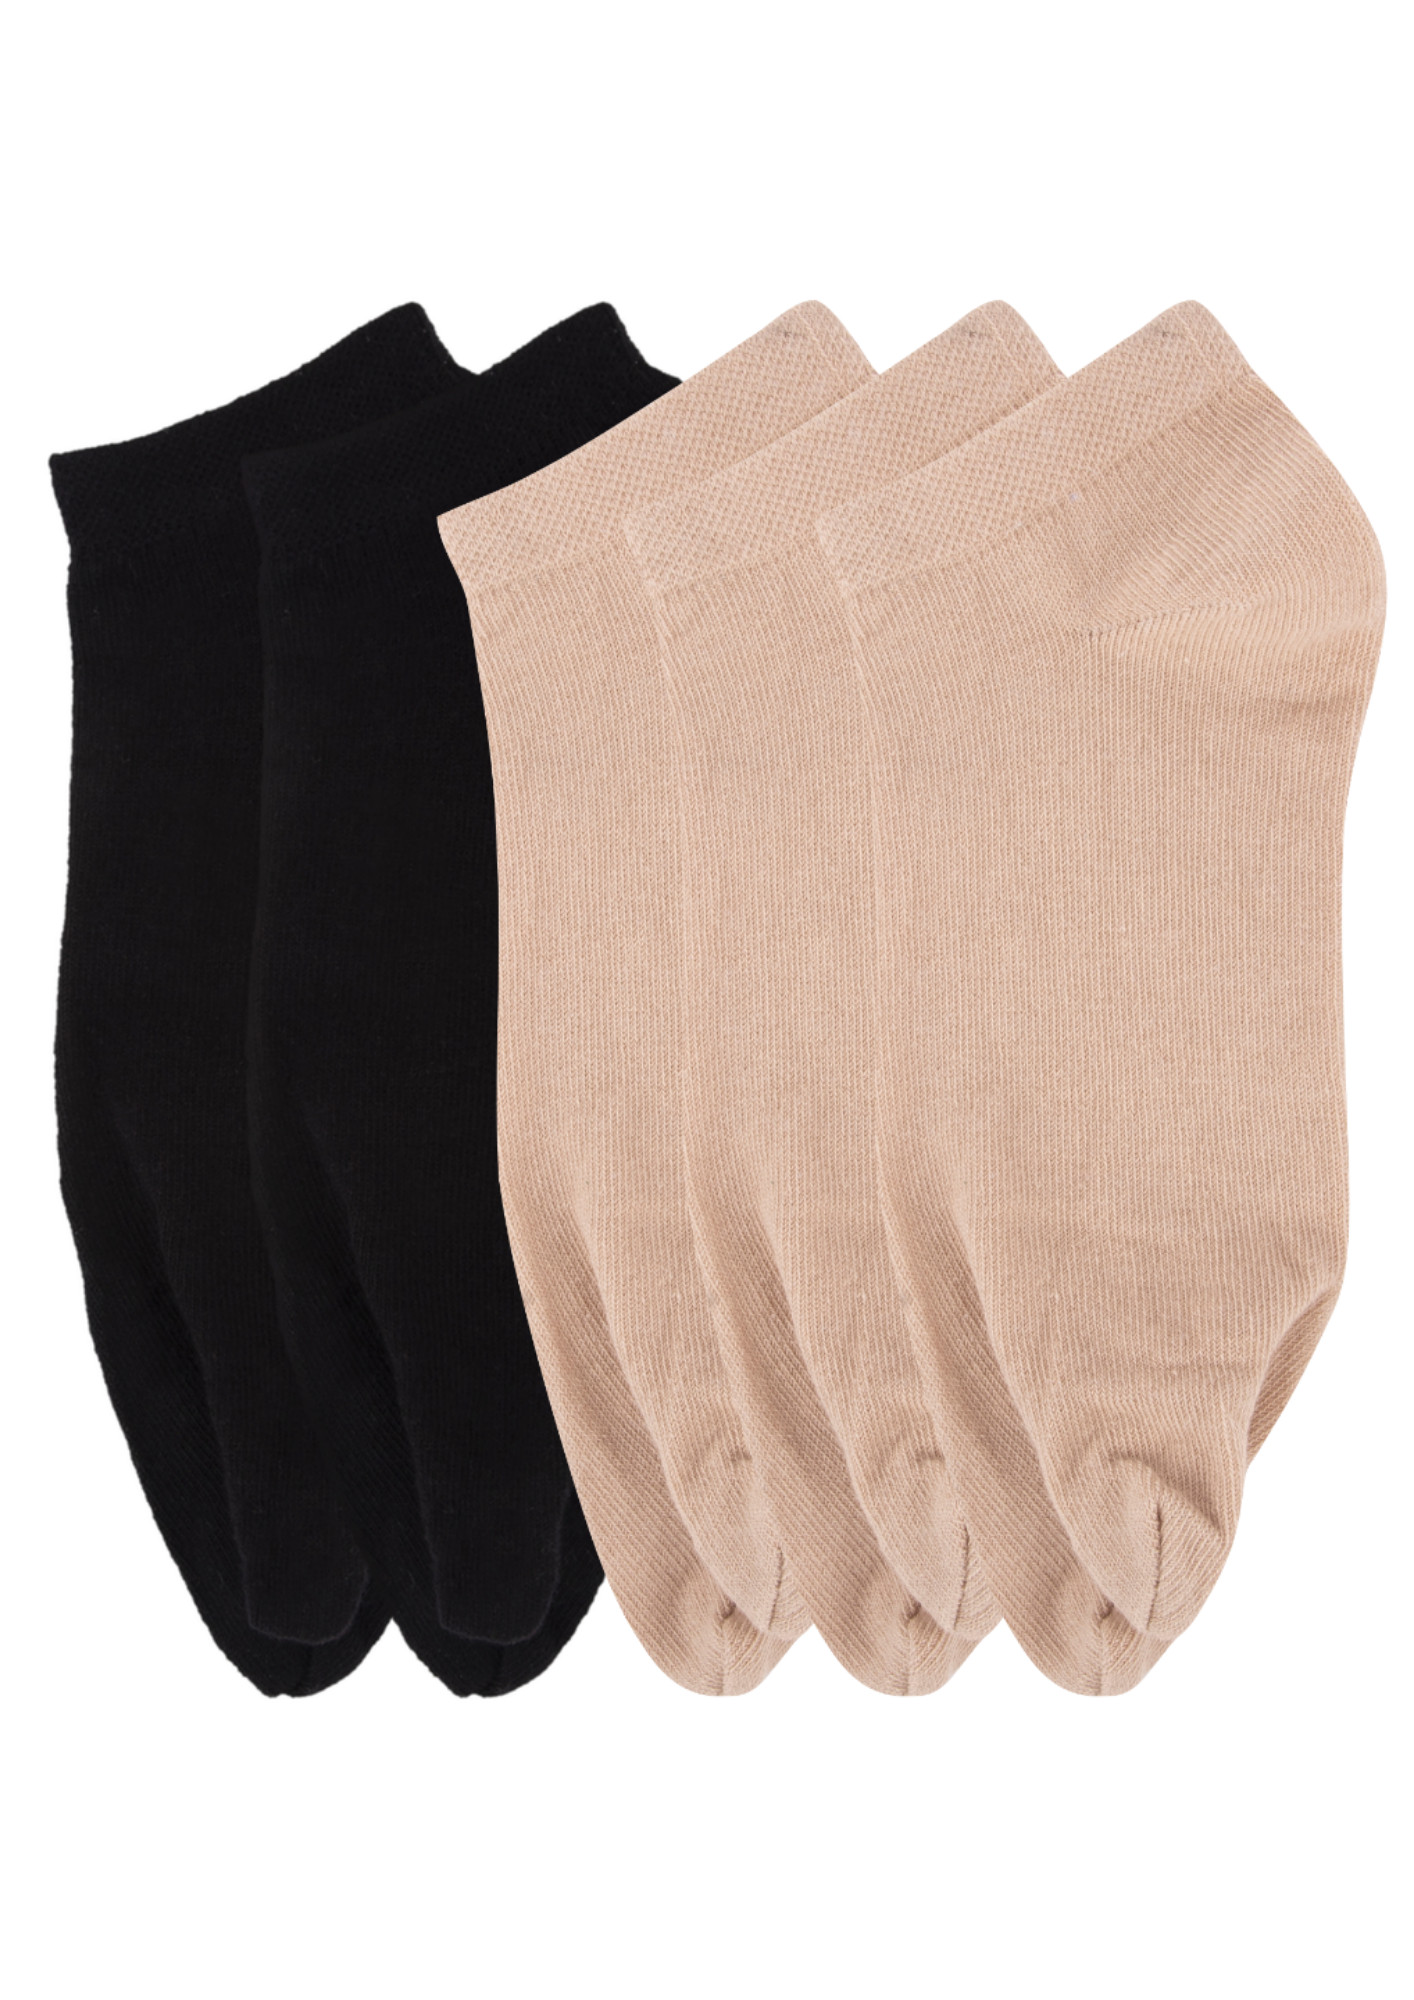 NEXT2SKIN Women Low Ankle Length Cotton Thumb Socks (Pack of 5) (Skin:Skin:Skin:Black:Black)